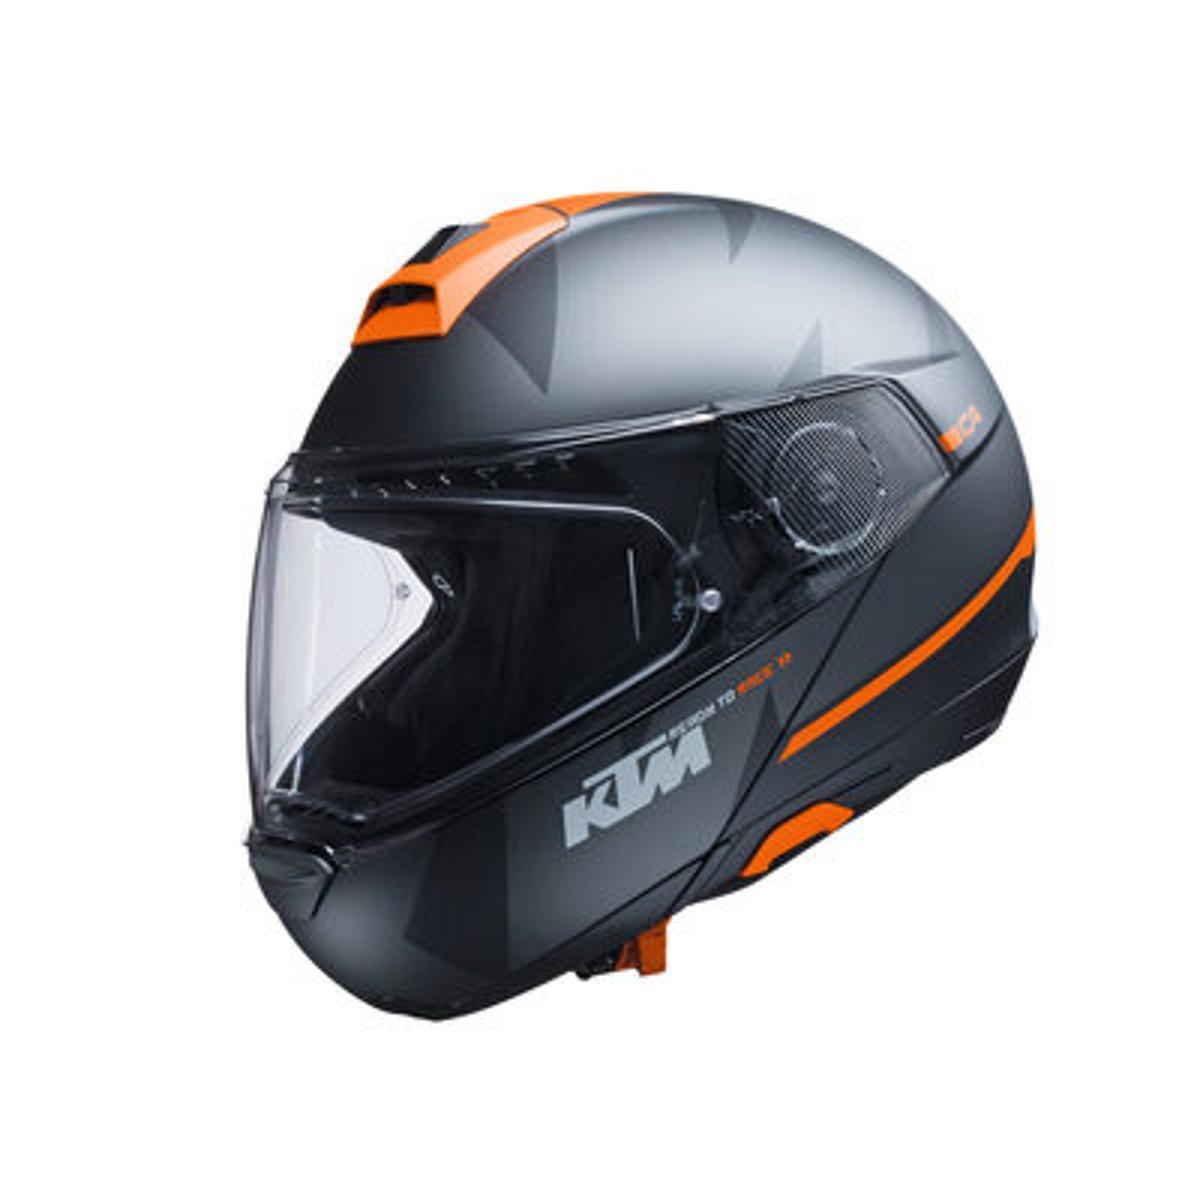 KTM C4 Helmet by Schuberth (Small) - UPW1819502